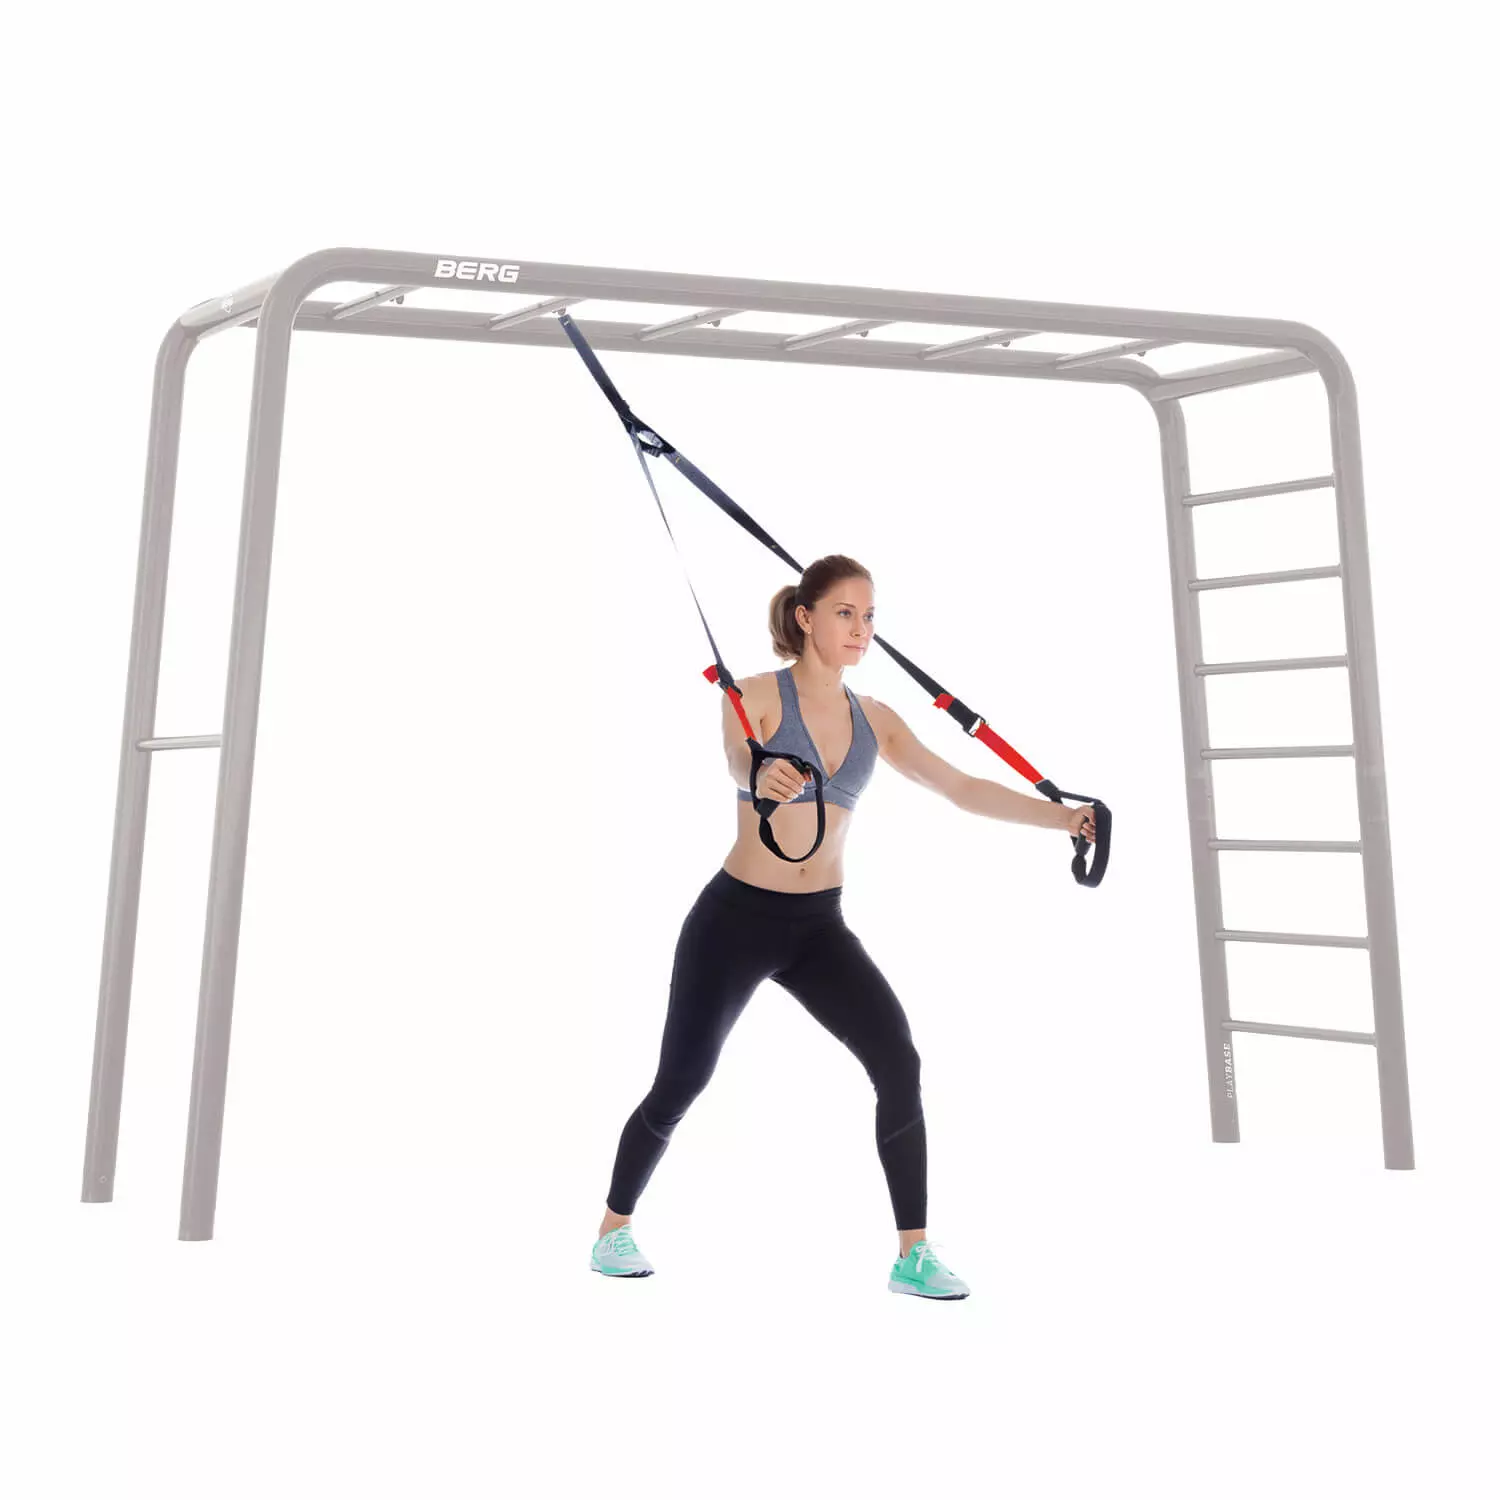 Berg Playbase Fitness Rope .